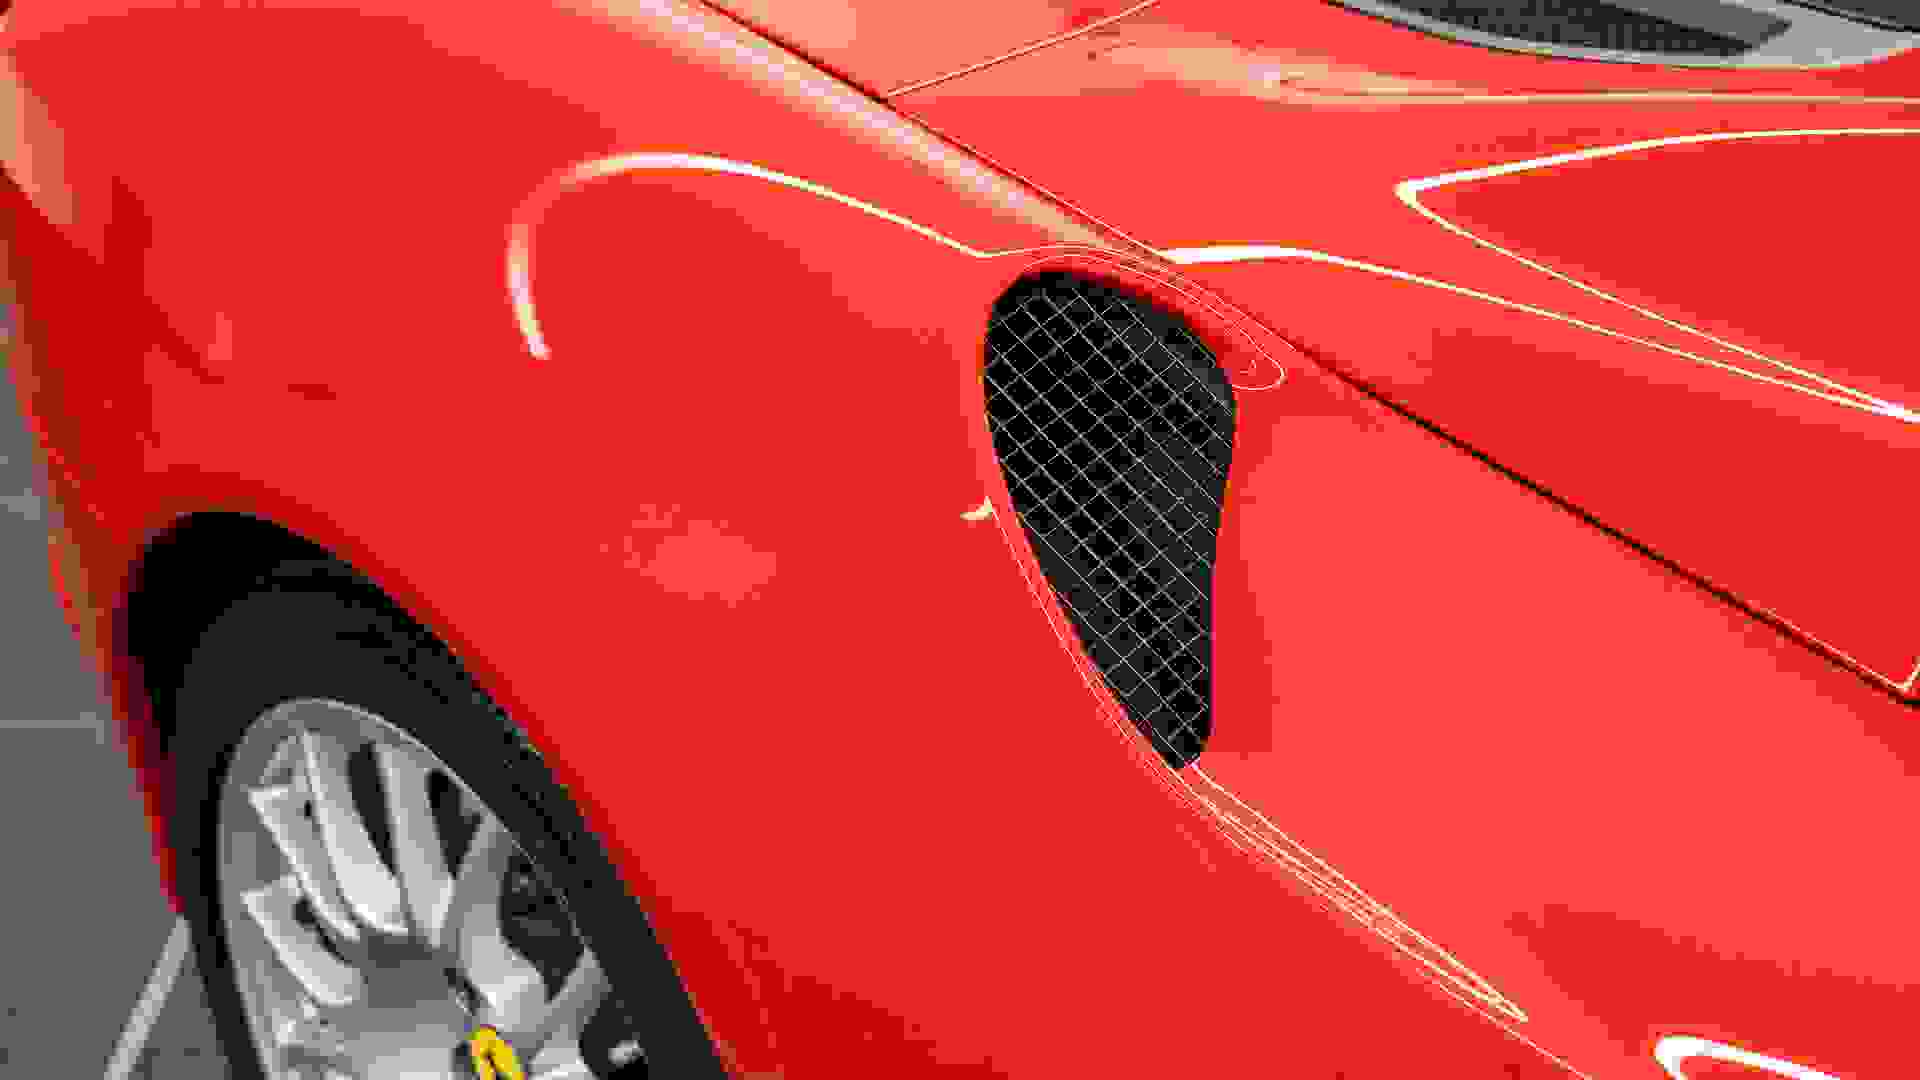 Ferrari F430 Spider Photo cd86f4f4-9d63-4062-81fc-df6cae1afc01.jpg